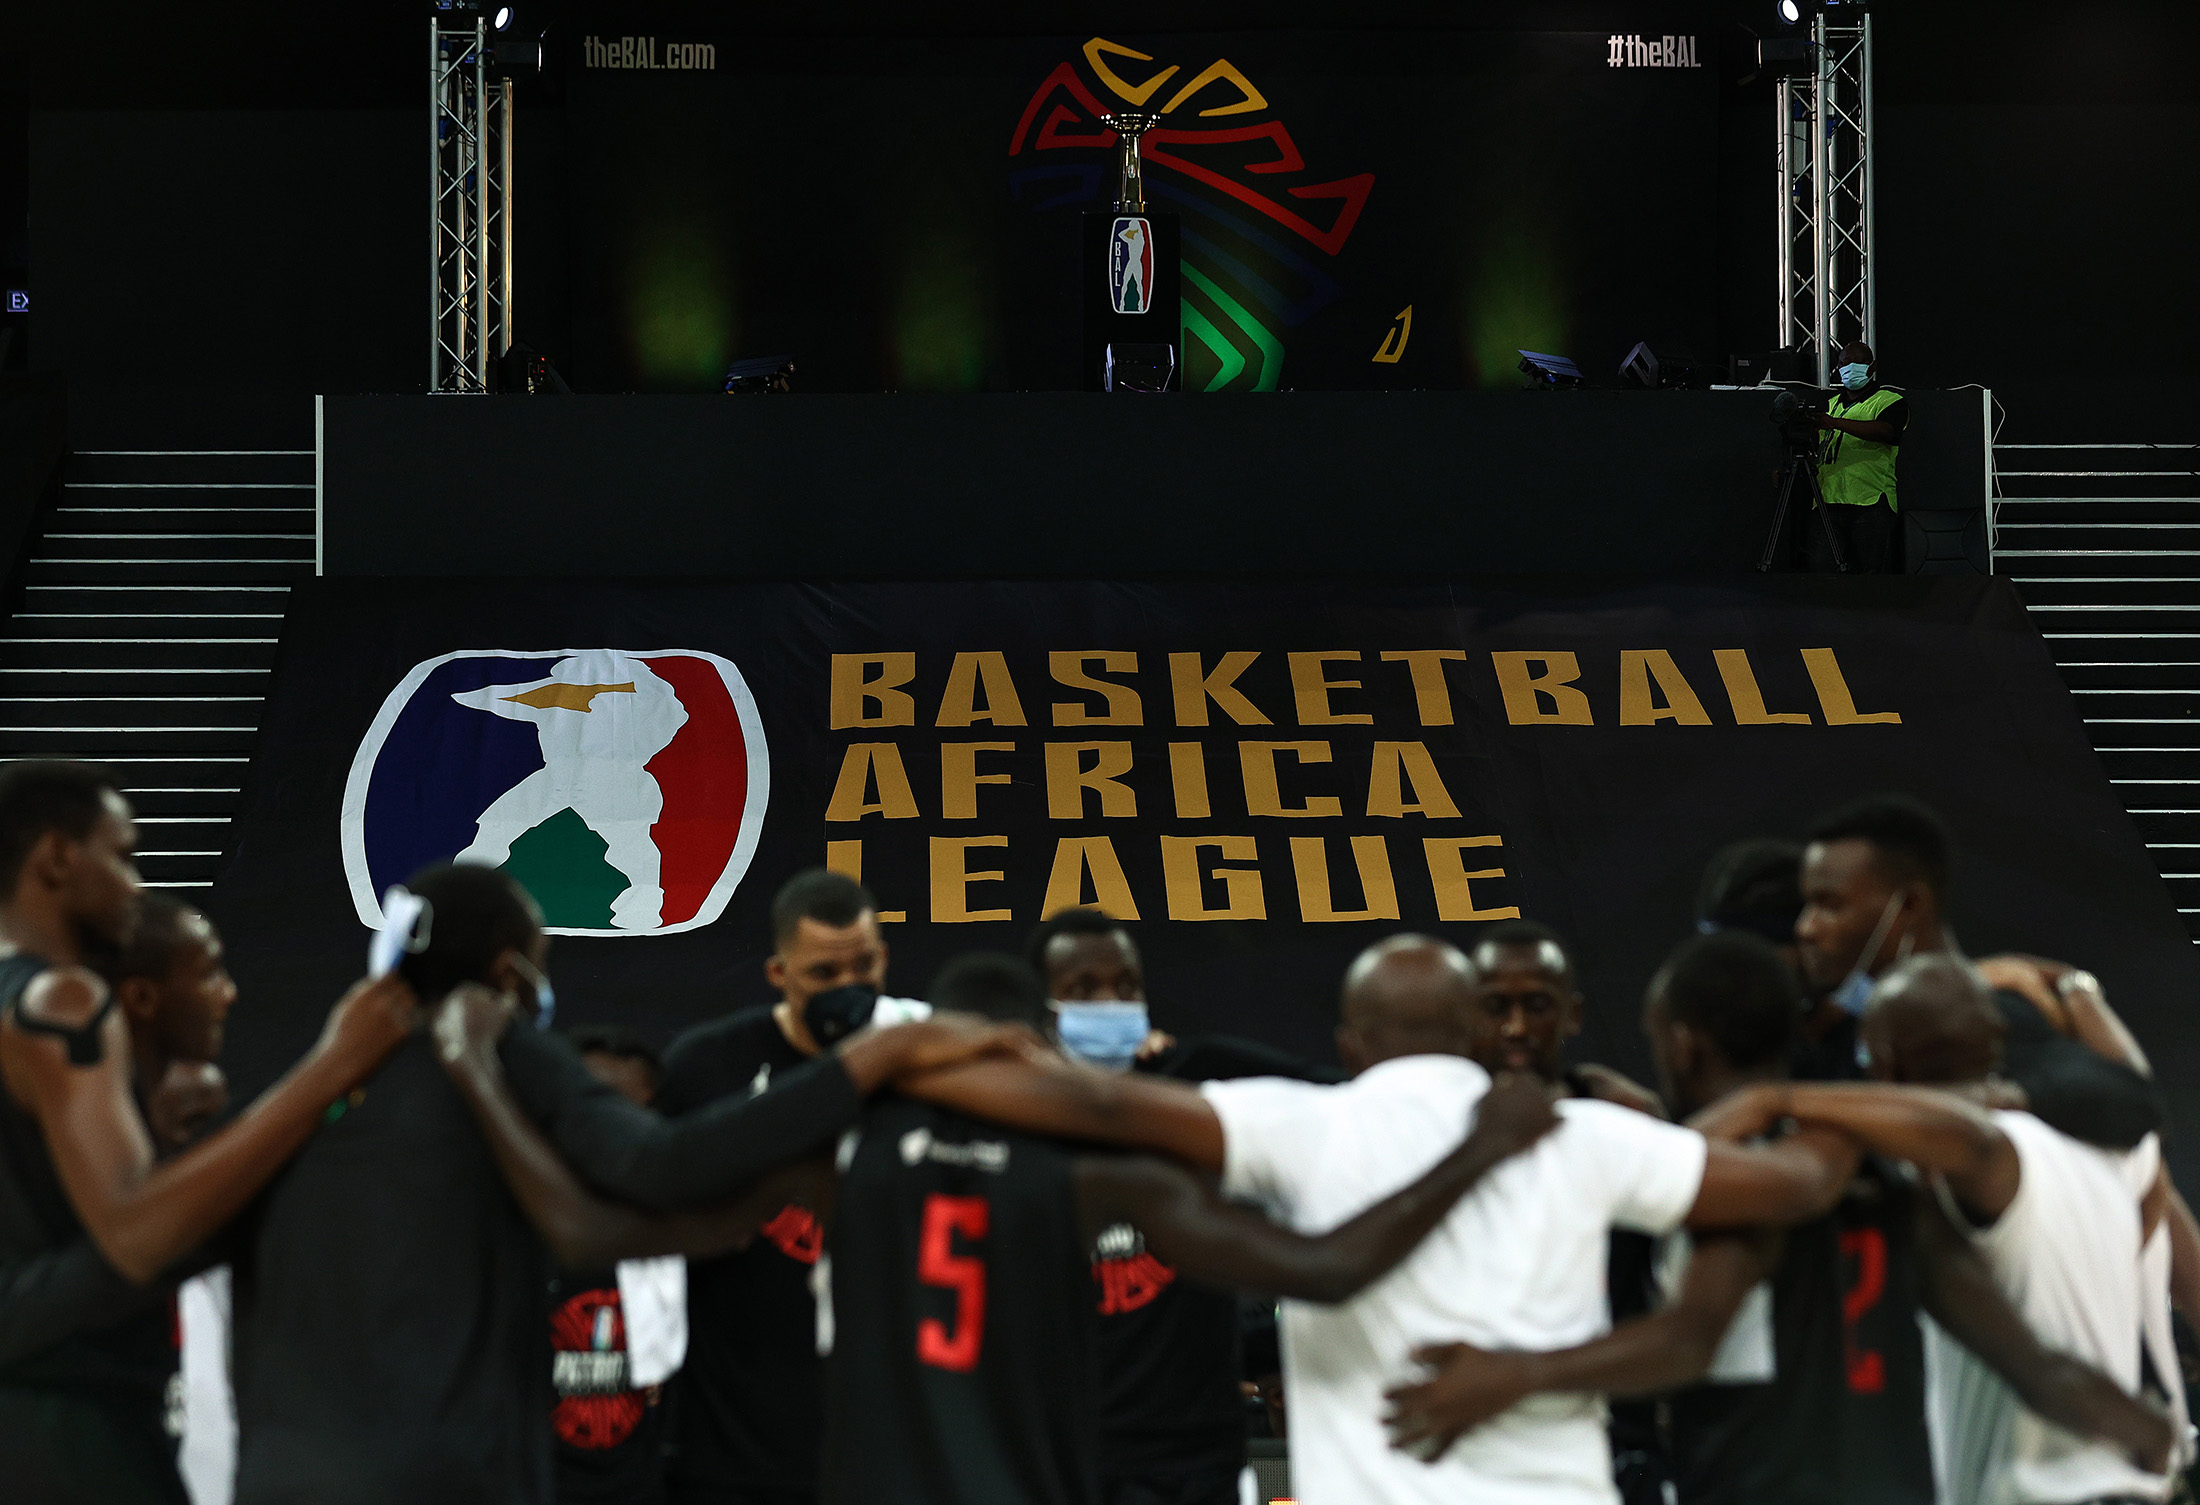 Olajuwon: Godfather of basketball in Africa